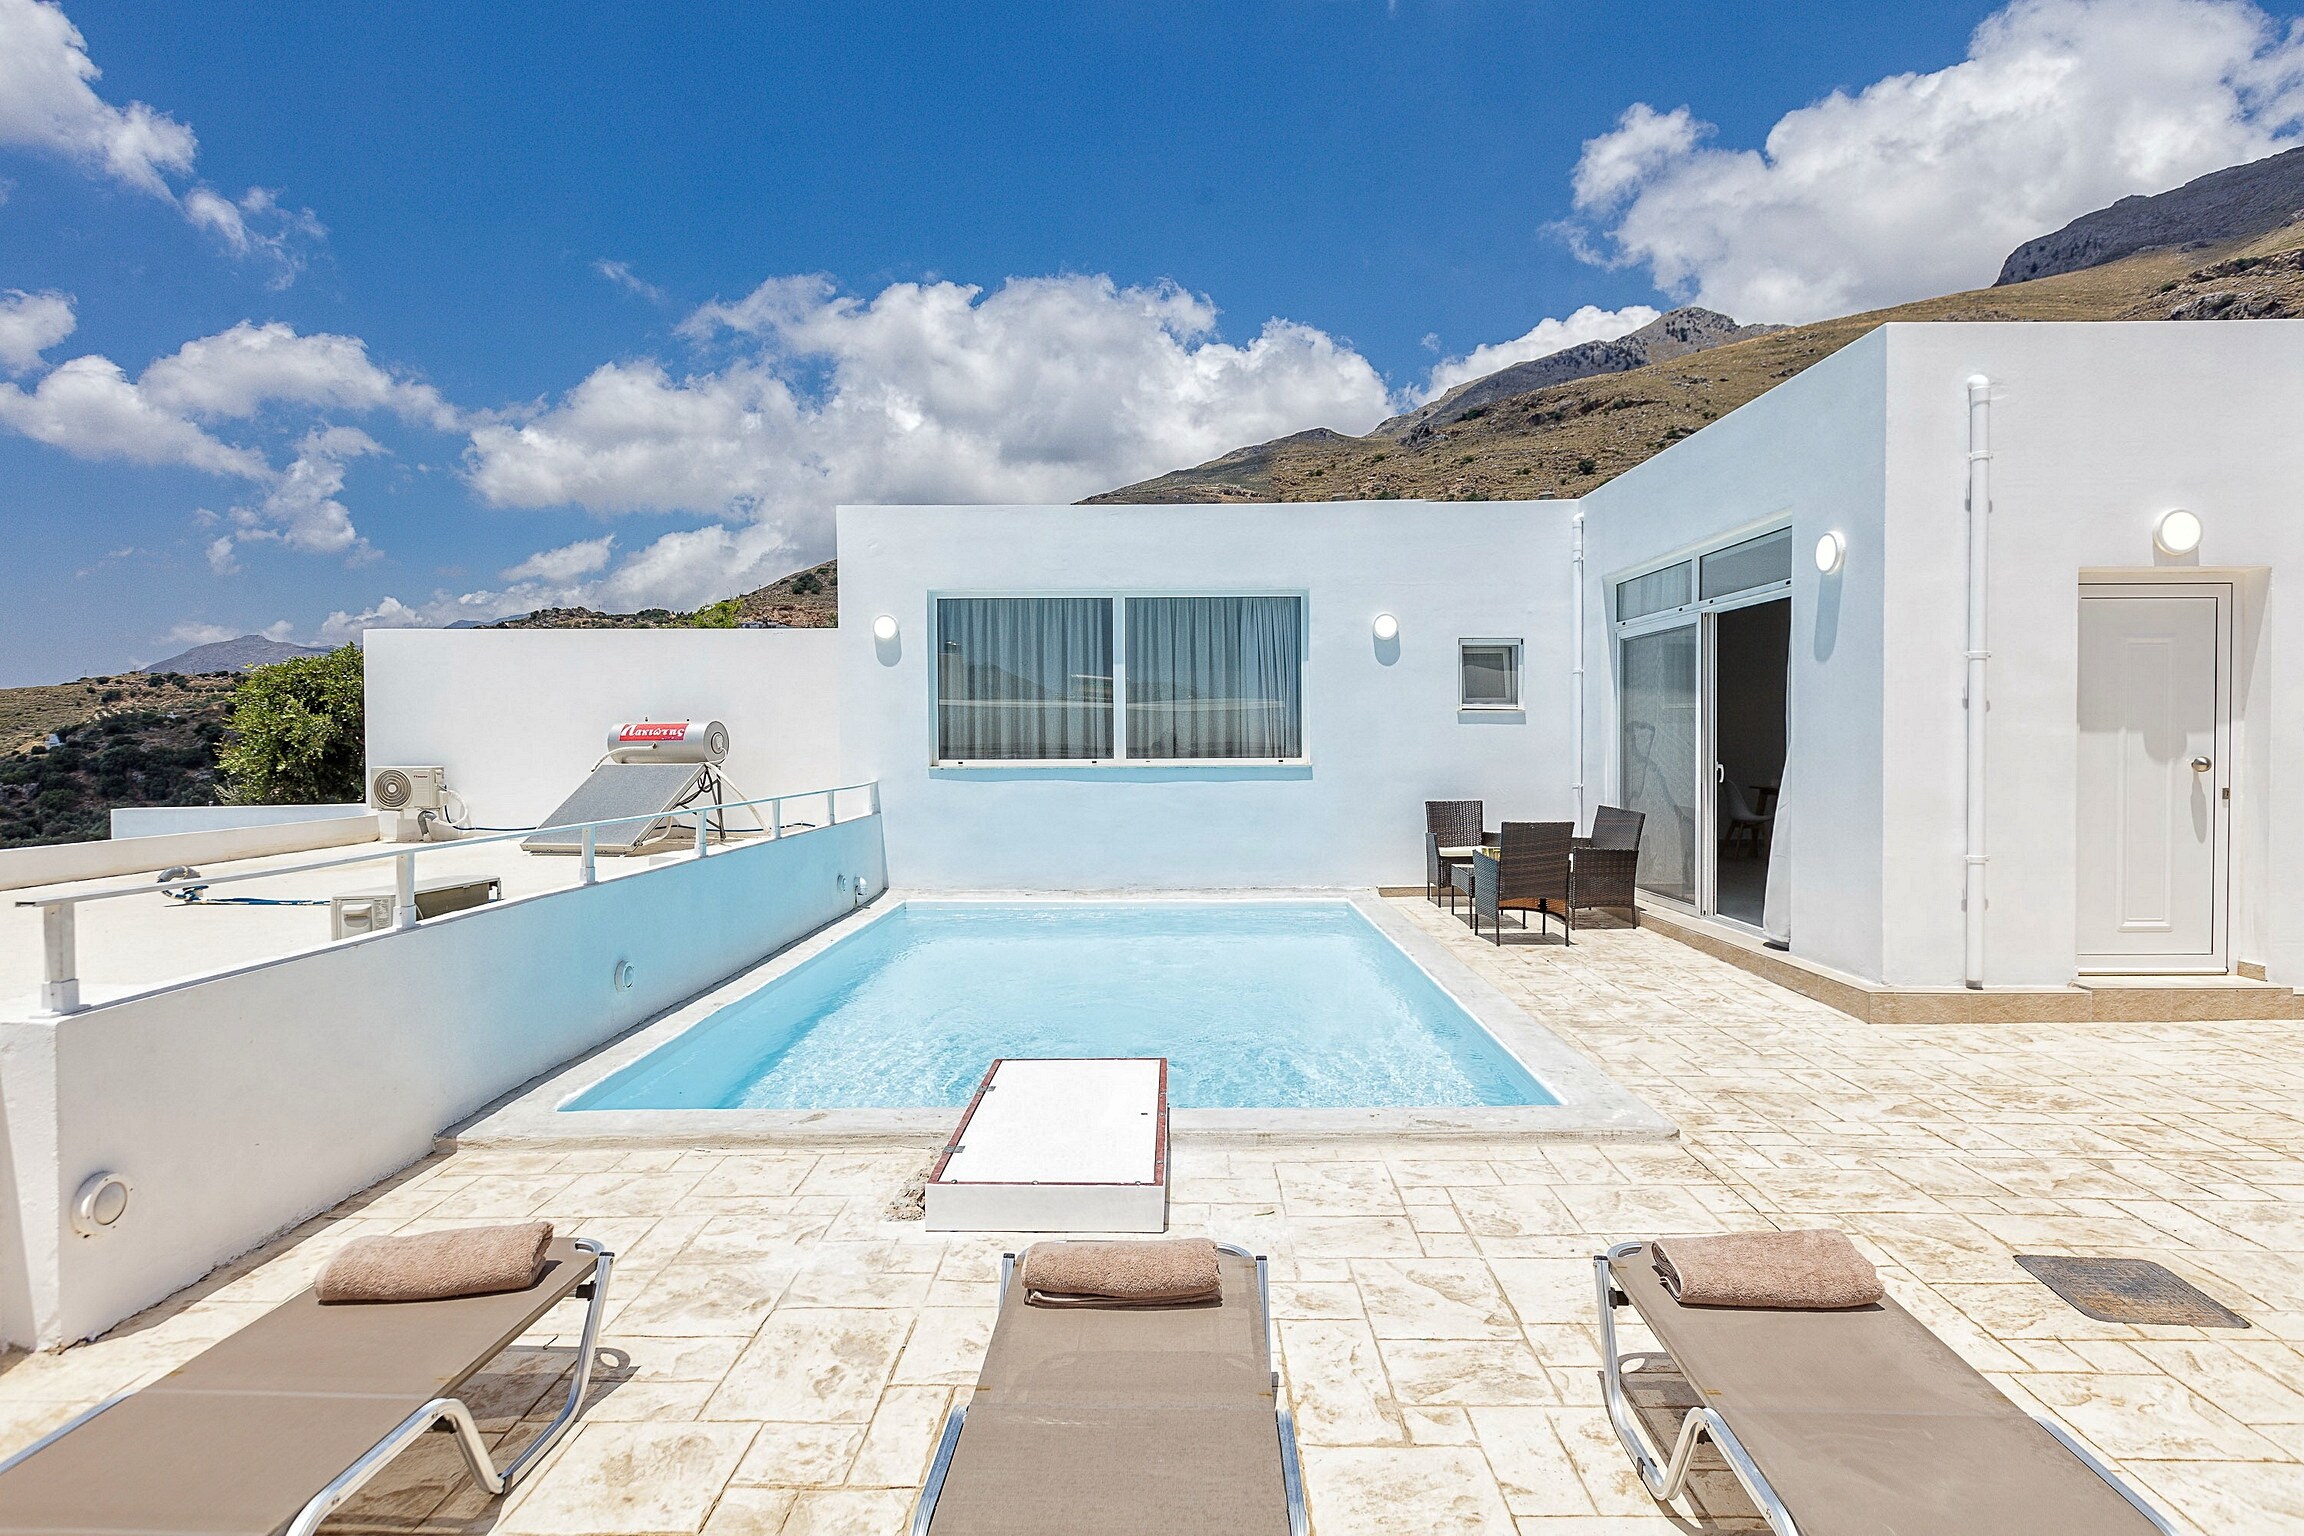 Swimming pool area of Beautiful villa,Great view,Private pool,Near tavern Mariou,Plakias,Crete